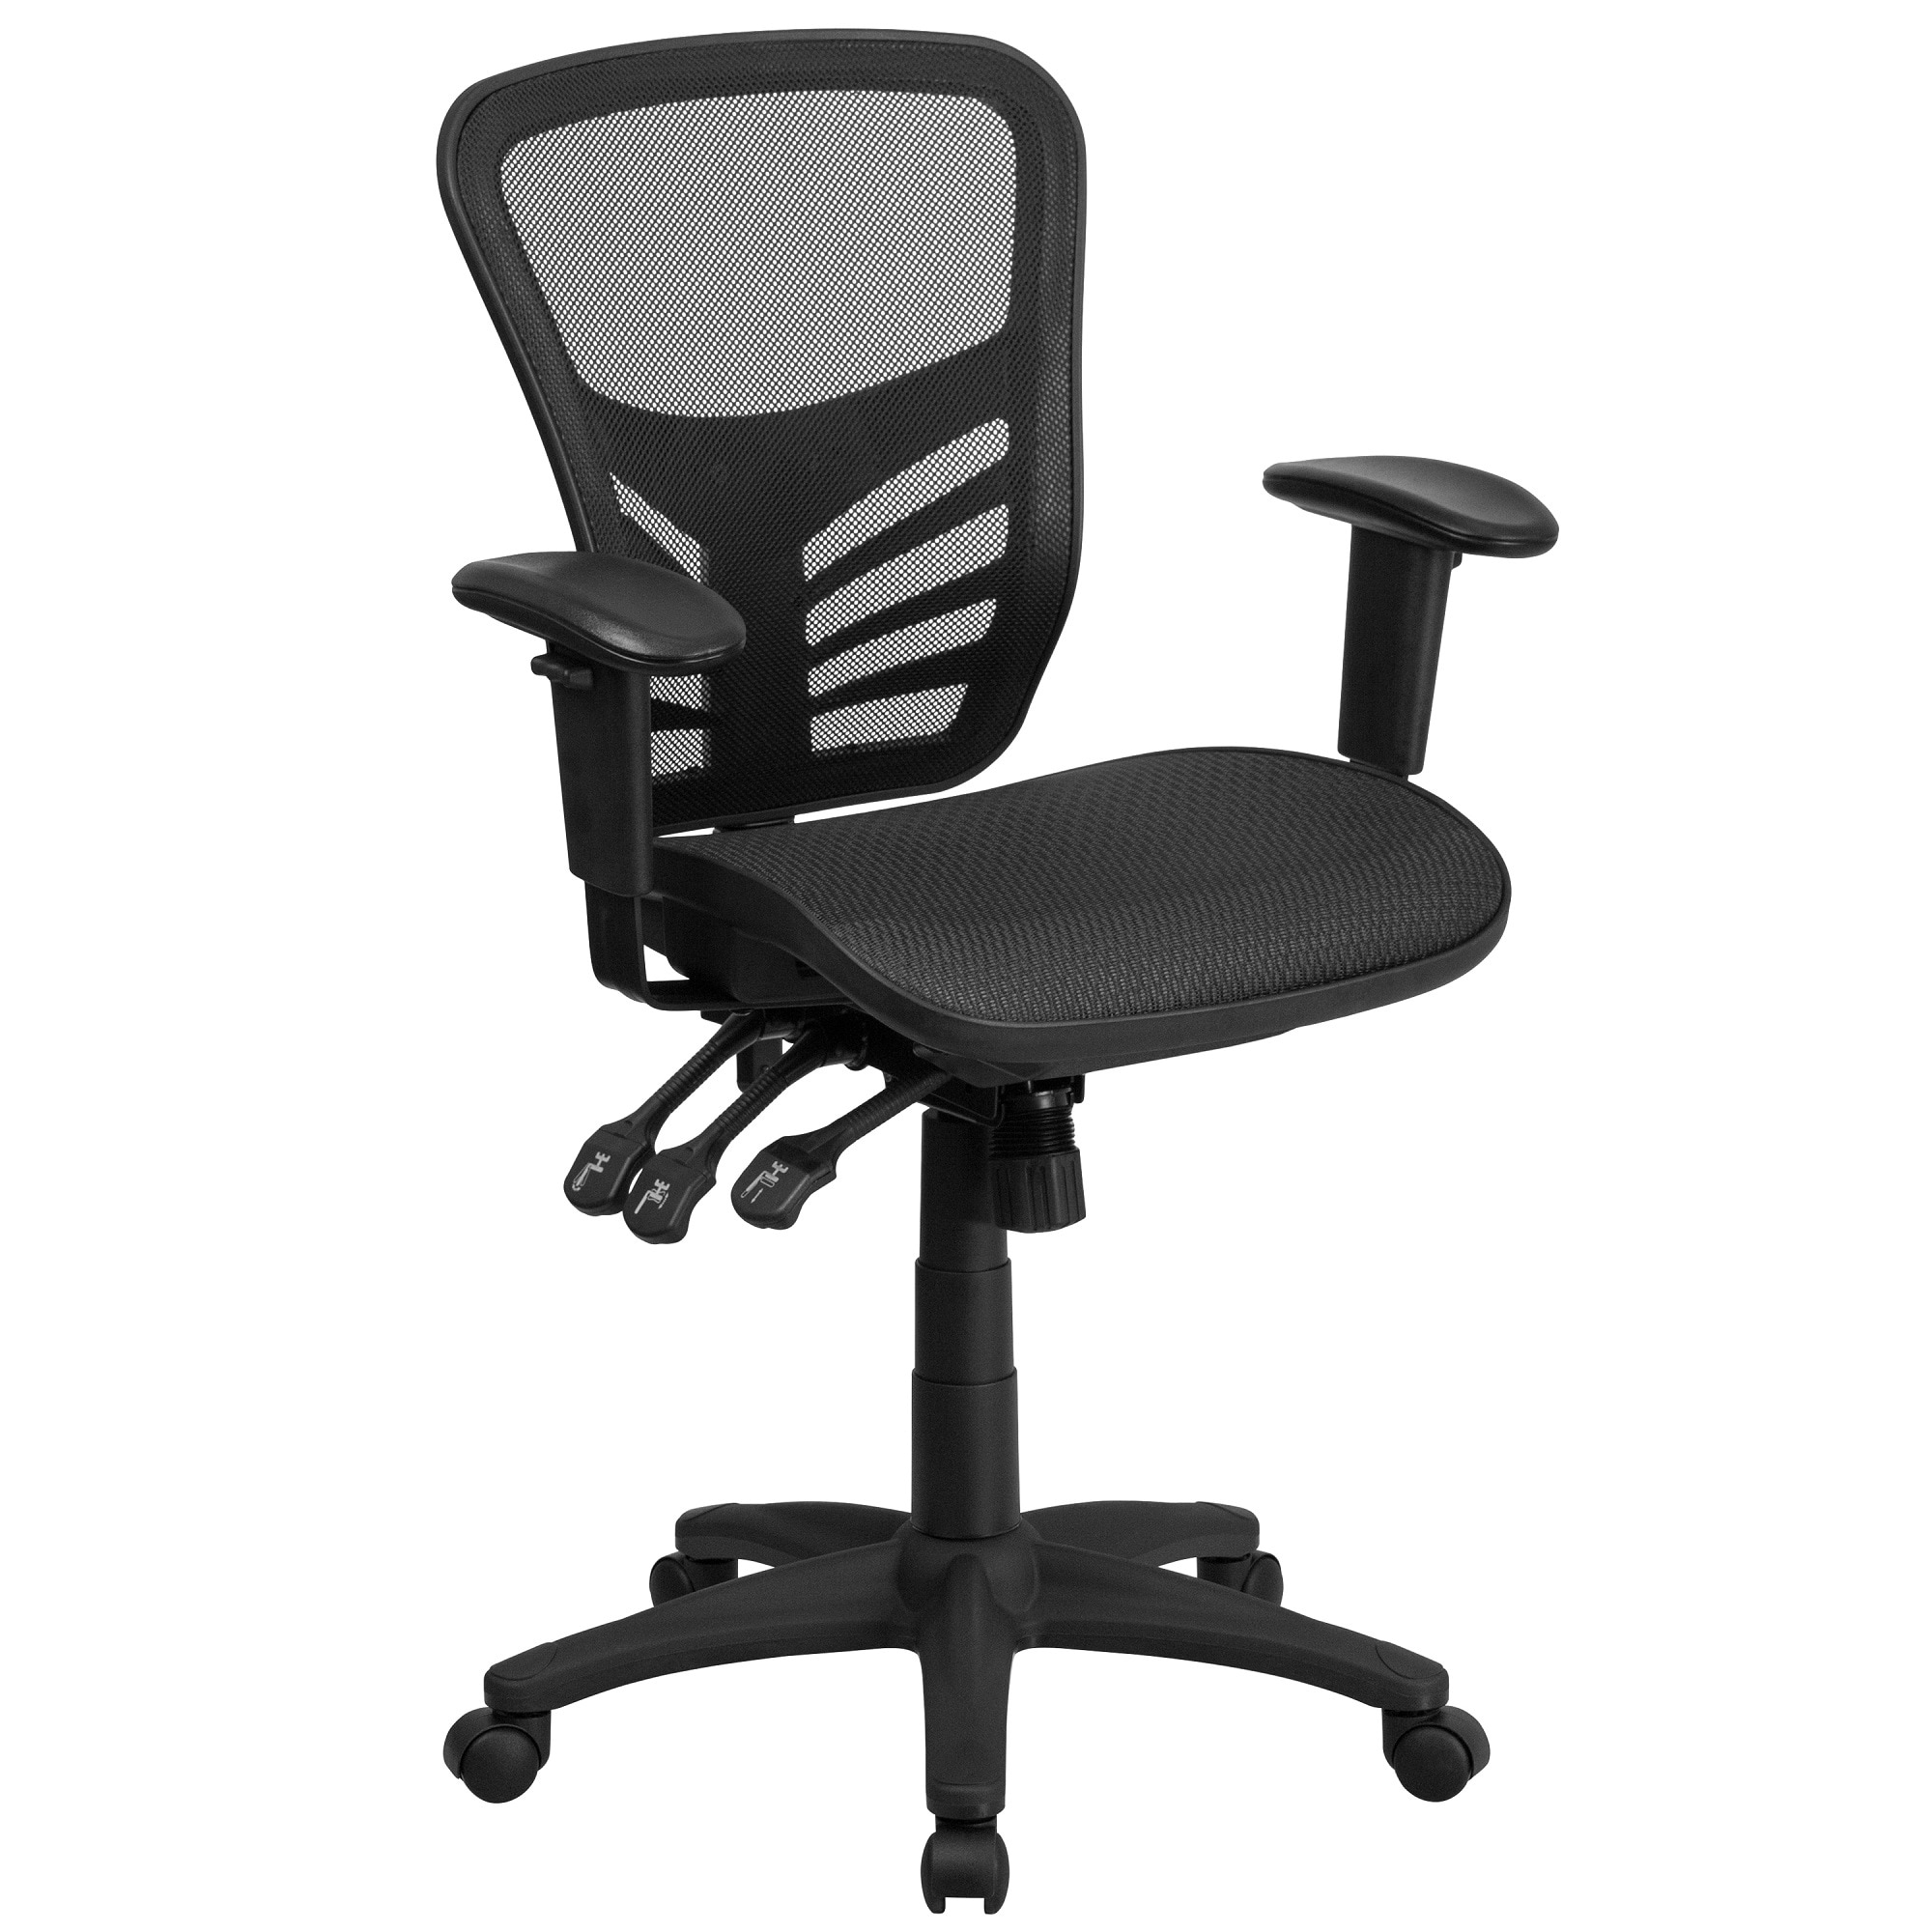 3.5' Black Transparent Swivel Ergonomic Office Chair Adjustable Arms